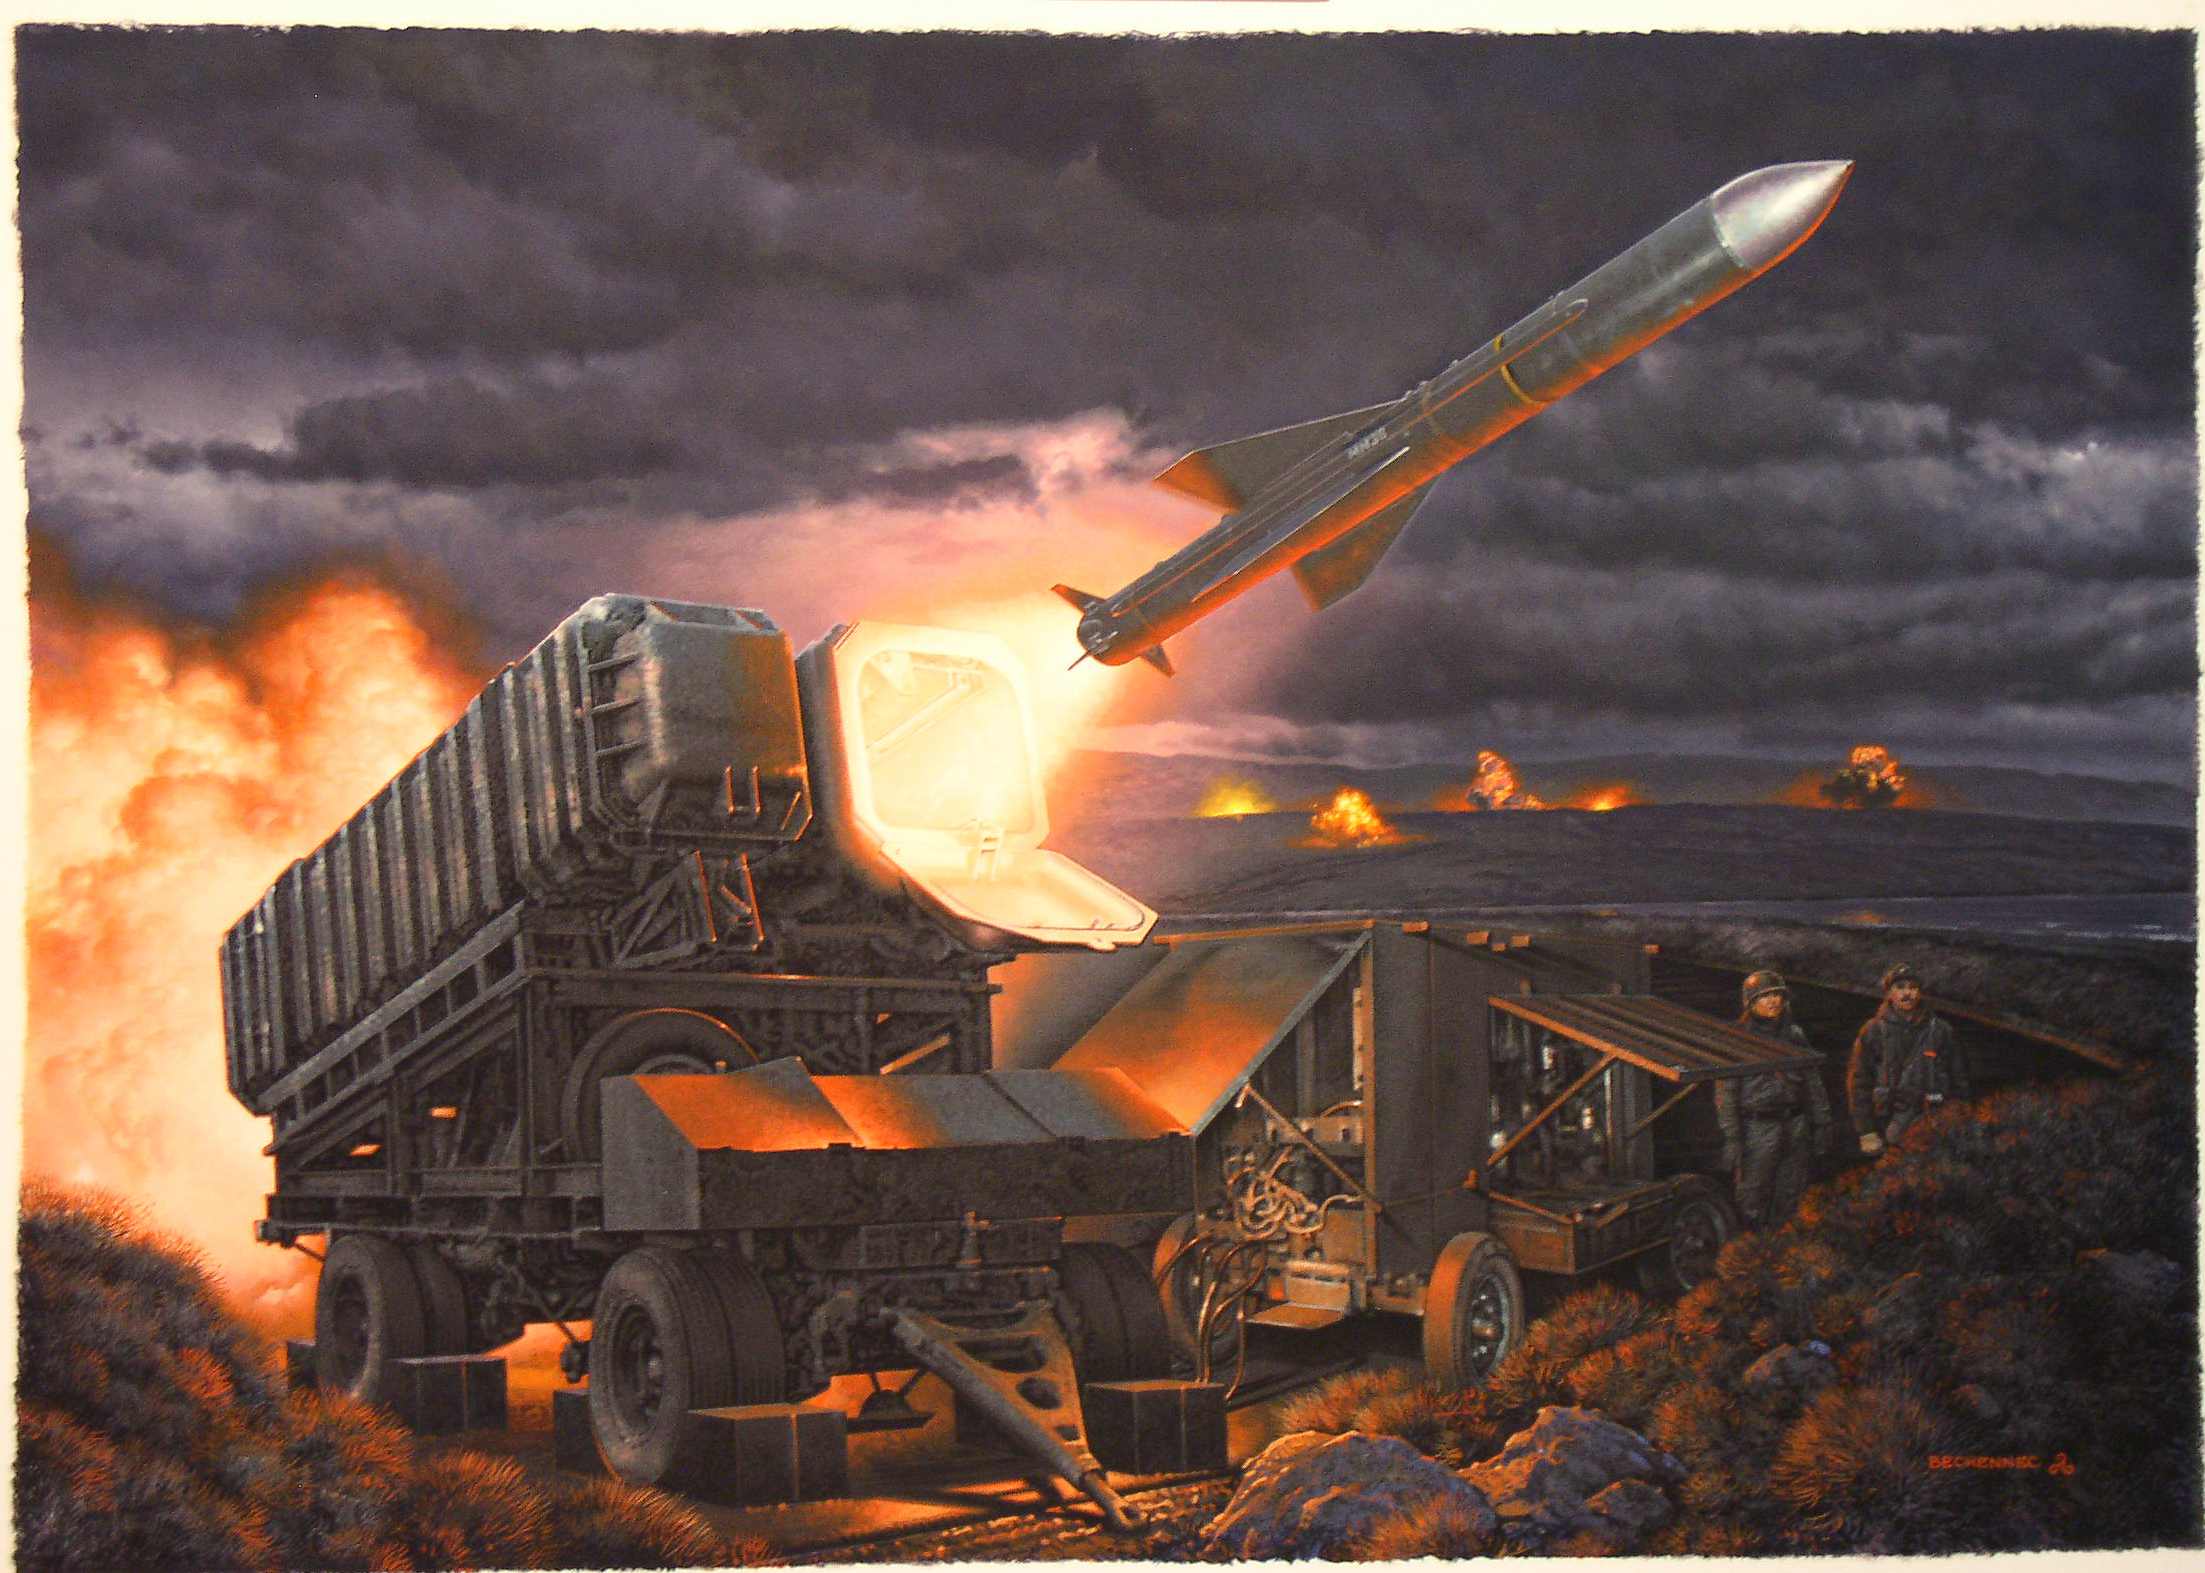 Rapier Missile firing in the Falklands War.